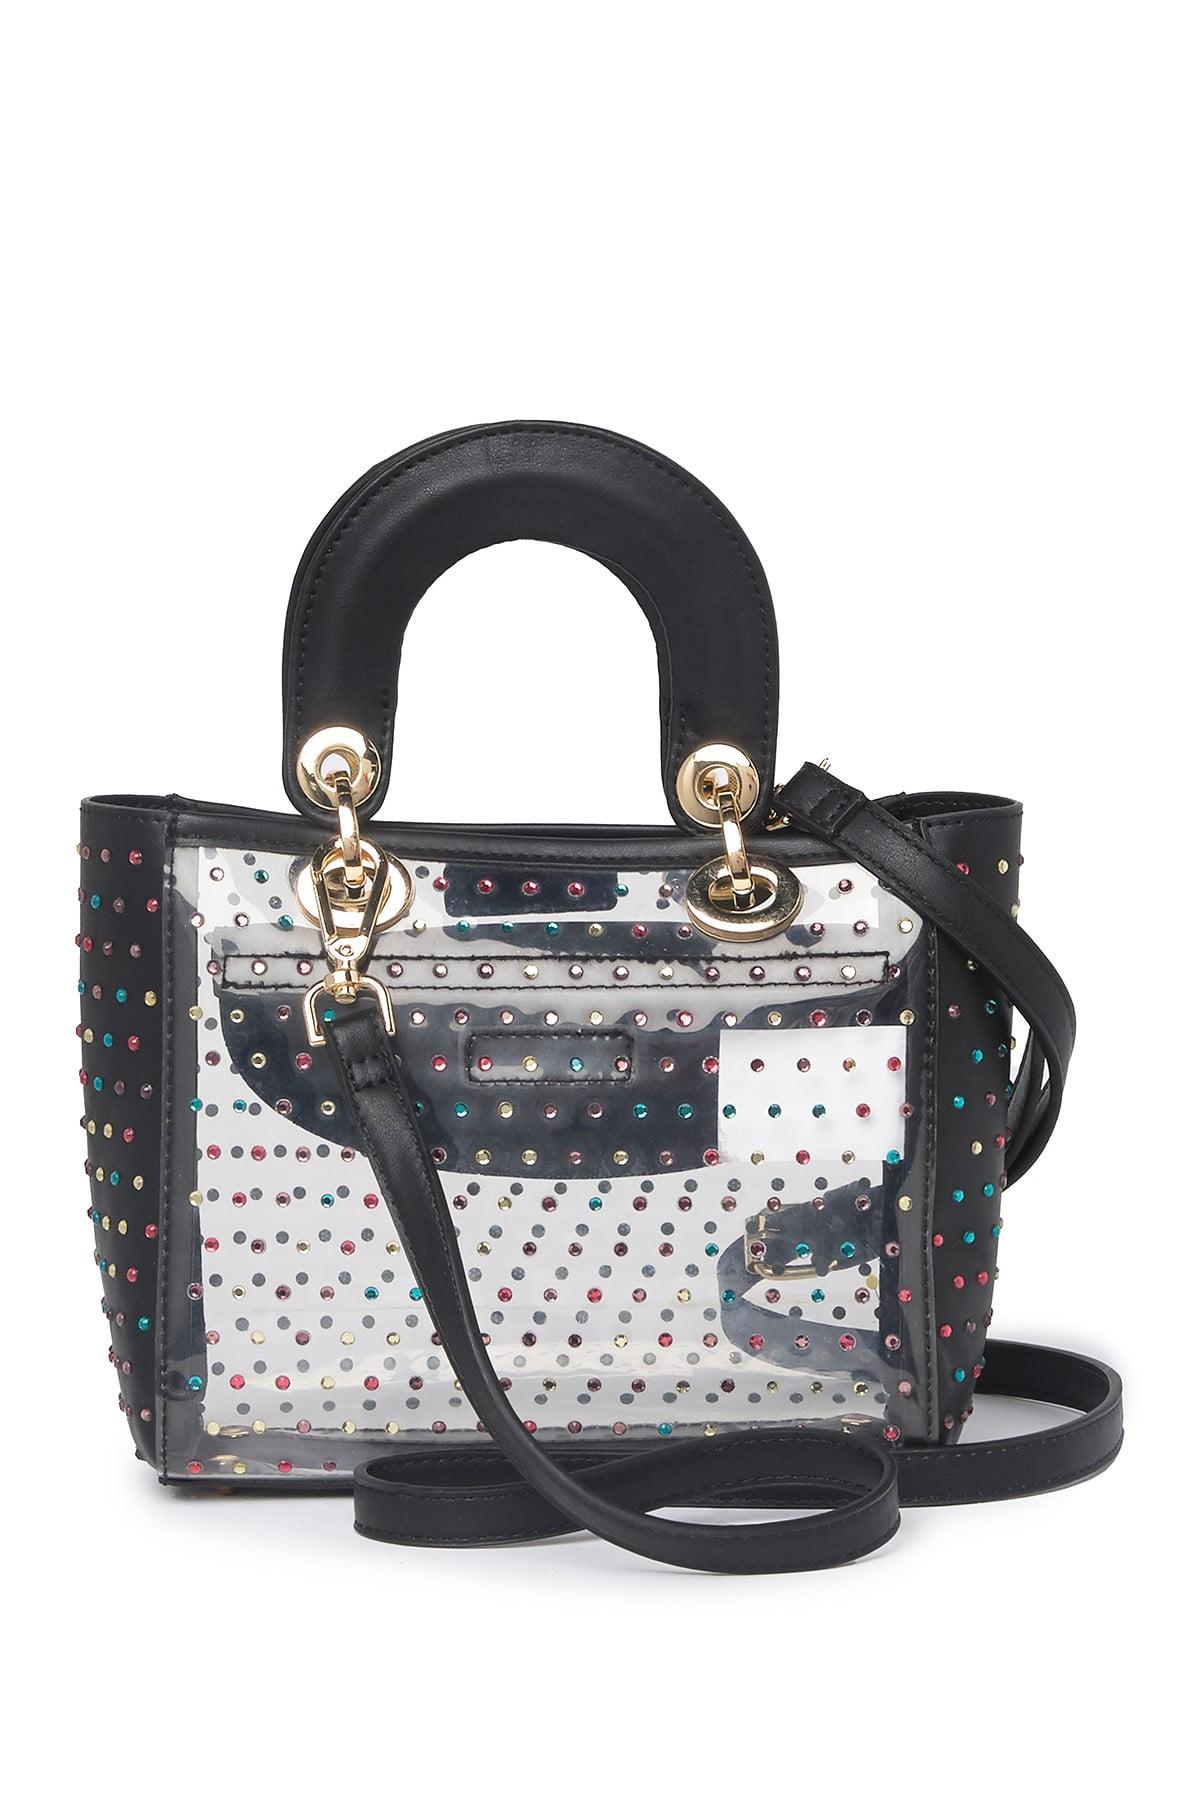 Betsey Johnson Doodle Bug Shoulder Bag, Black: Handbags: Amazon.com